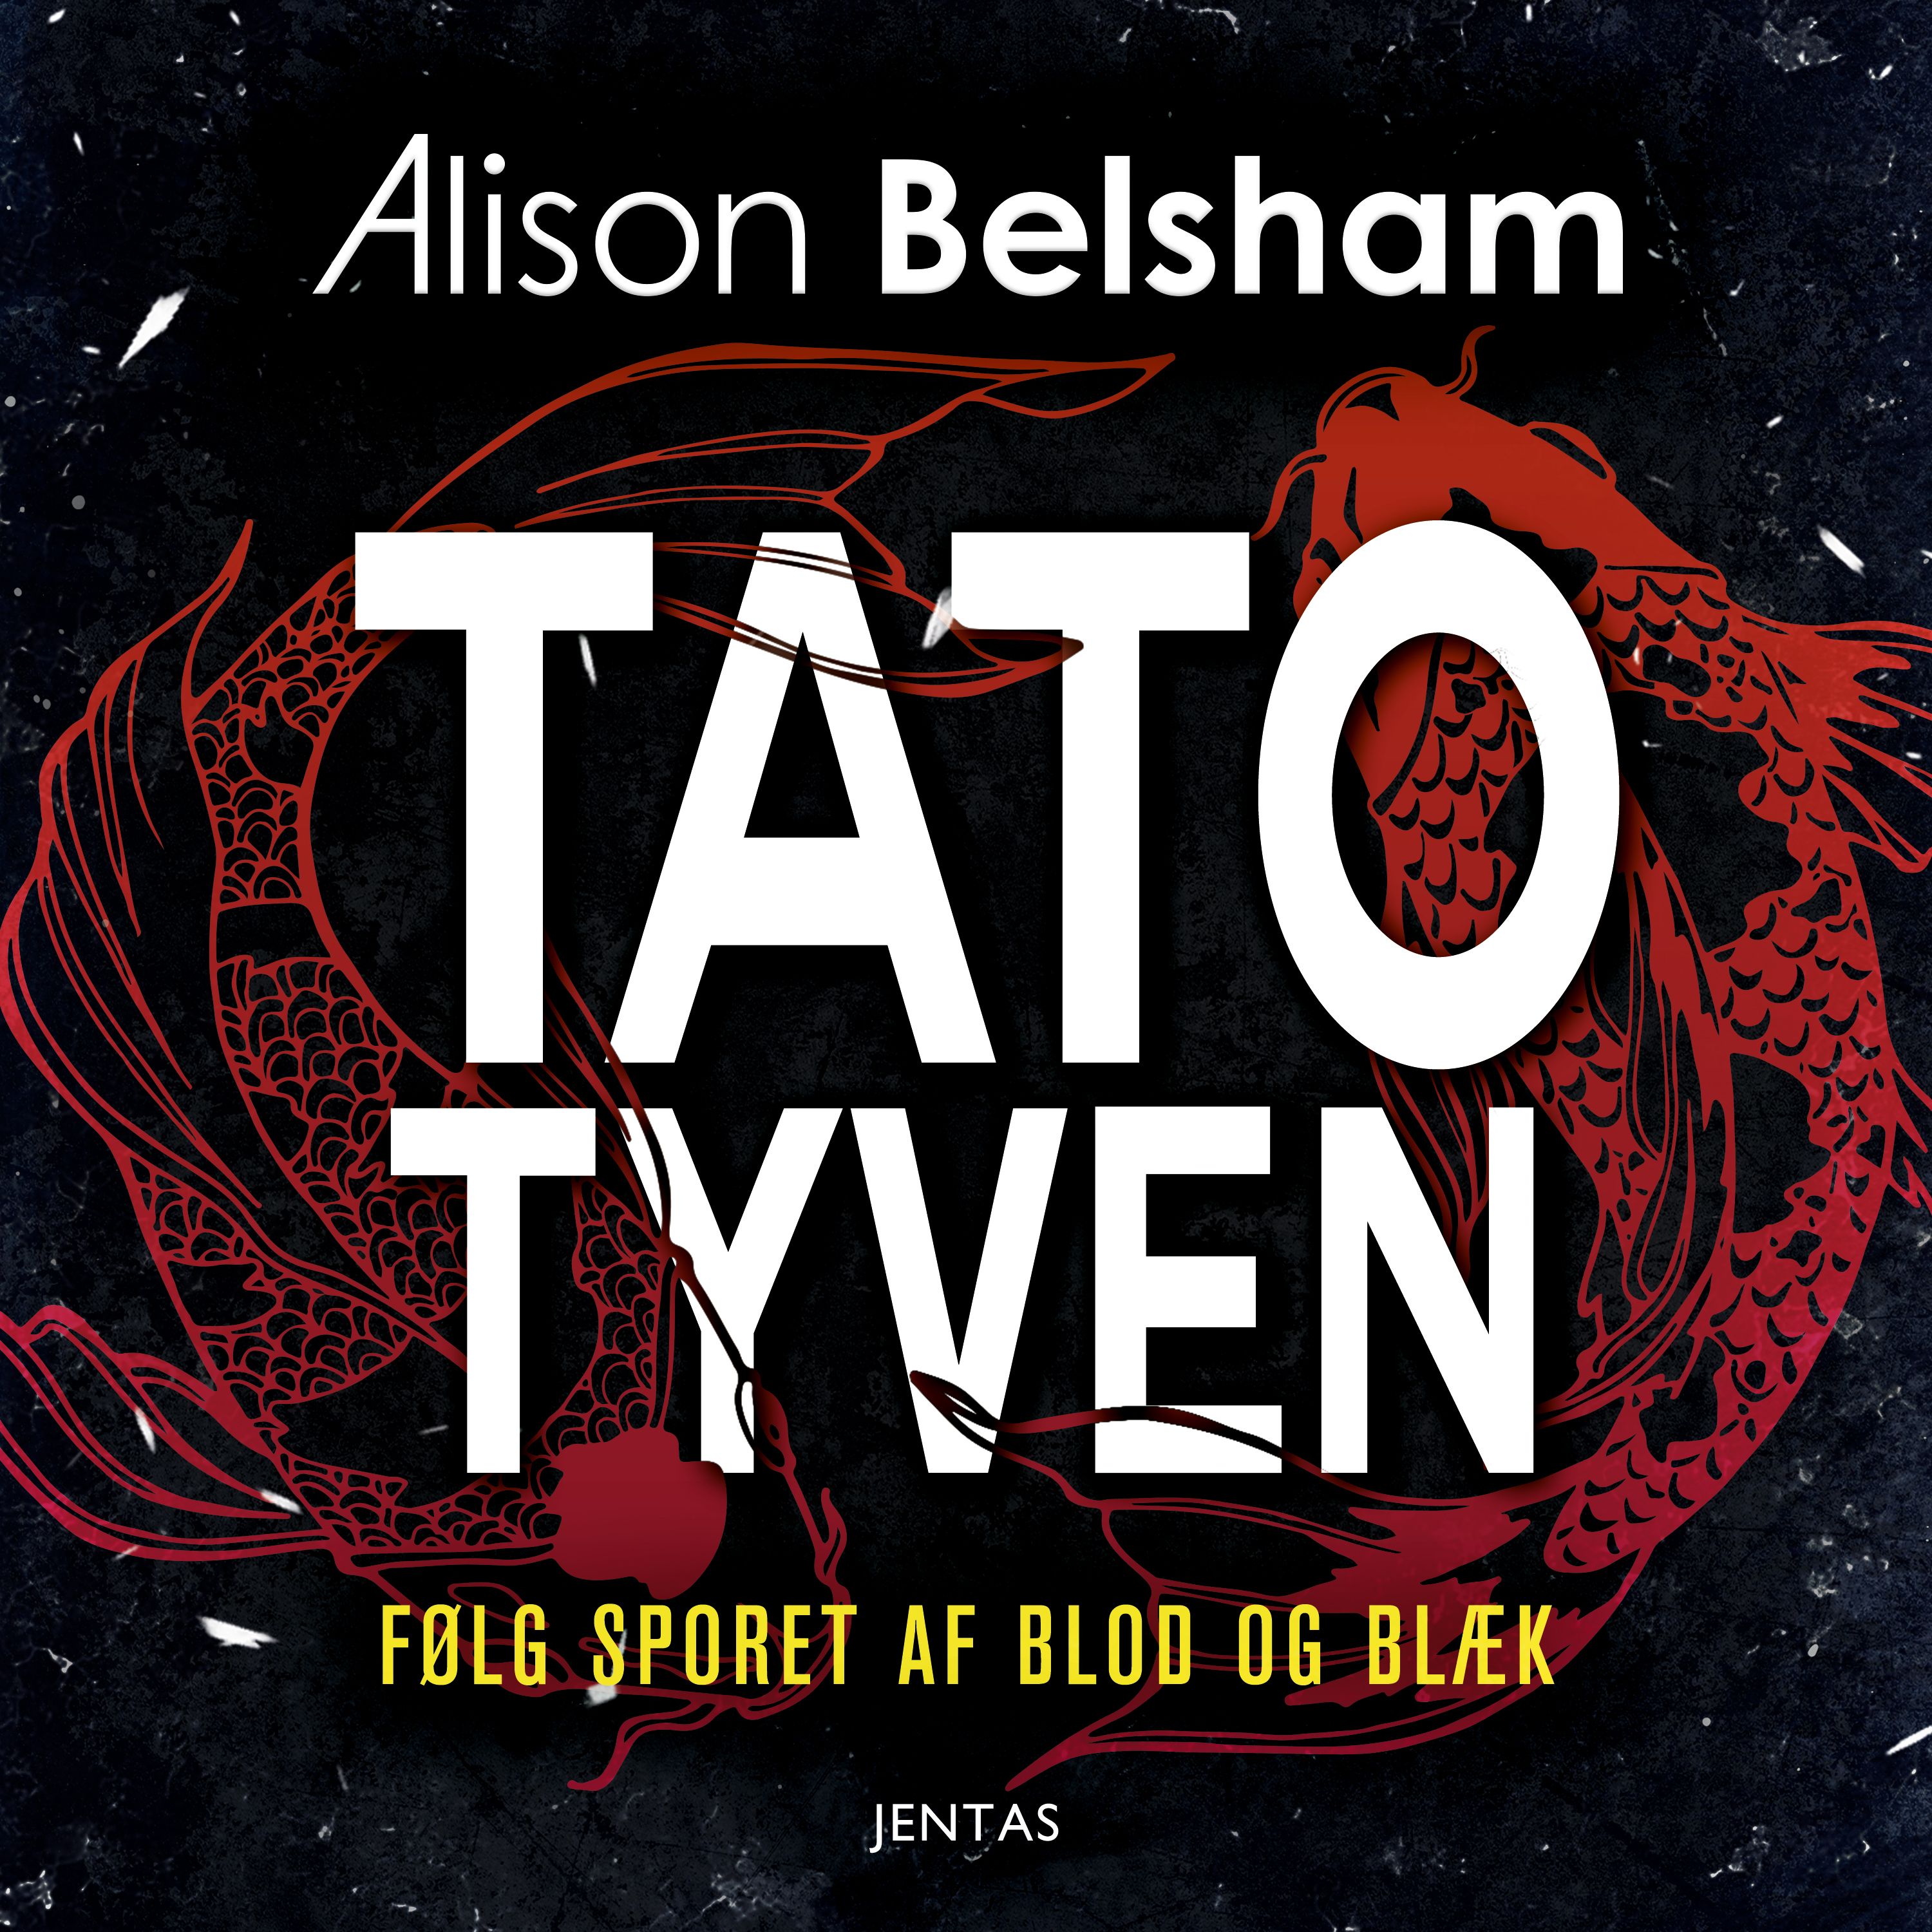 Tatotyven, audiobook by Alison Belsham